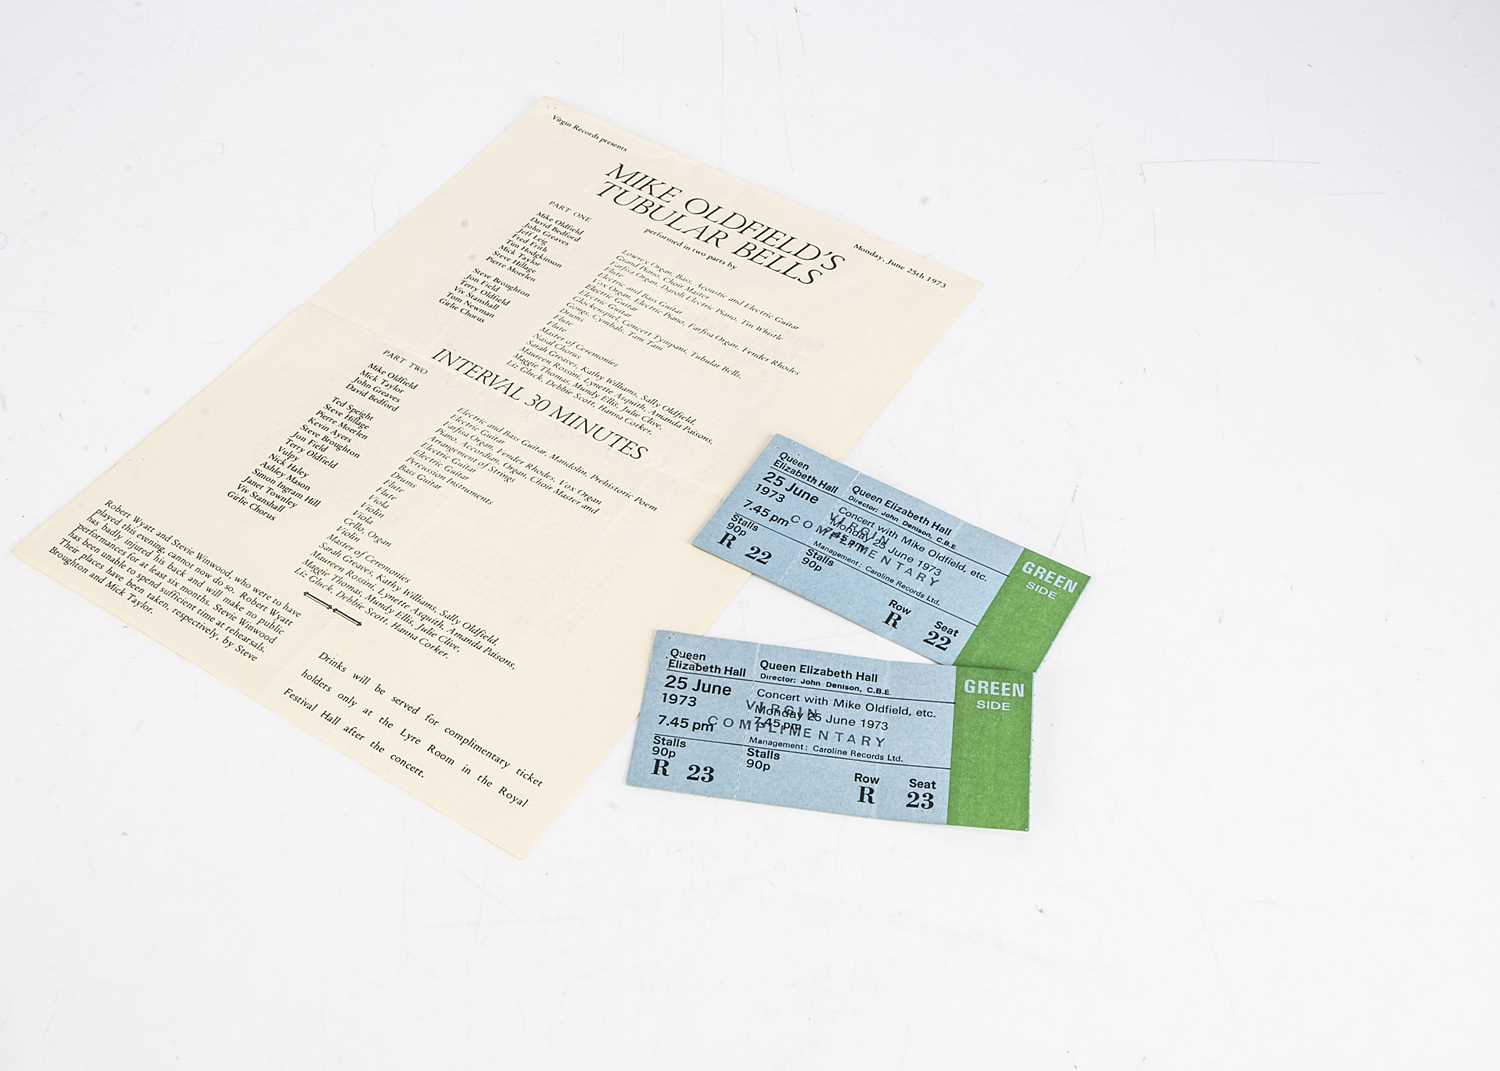 Lot 321 - Mike Oldfield / Tubular Bells Premiere Tickets Plus